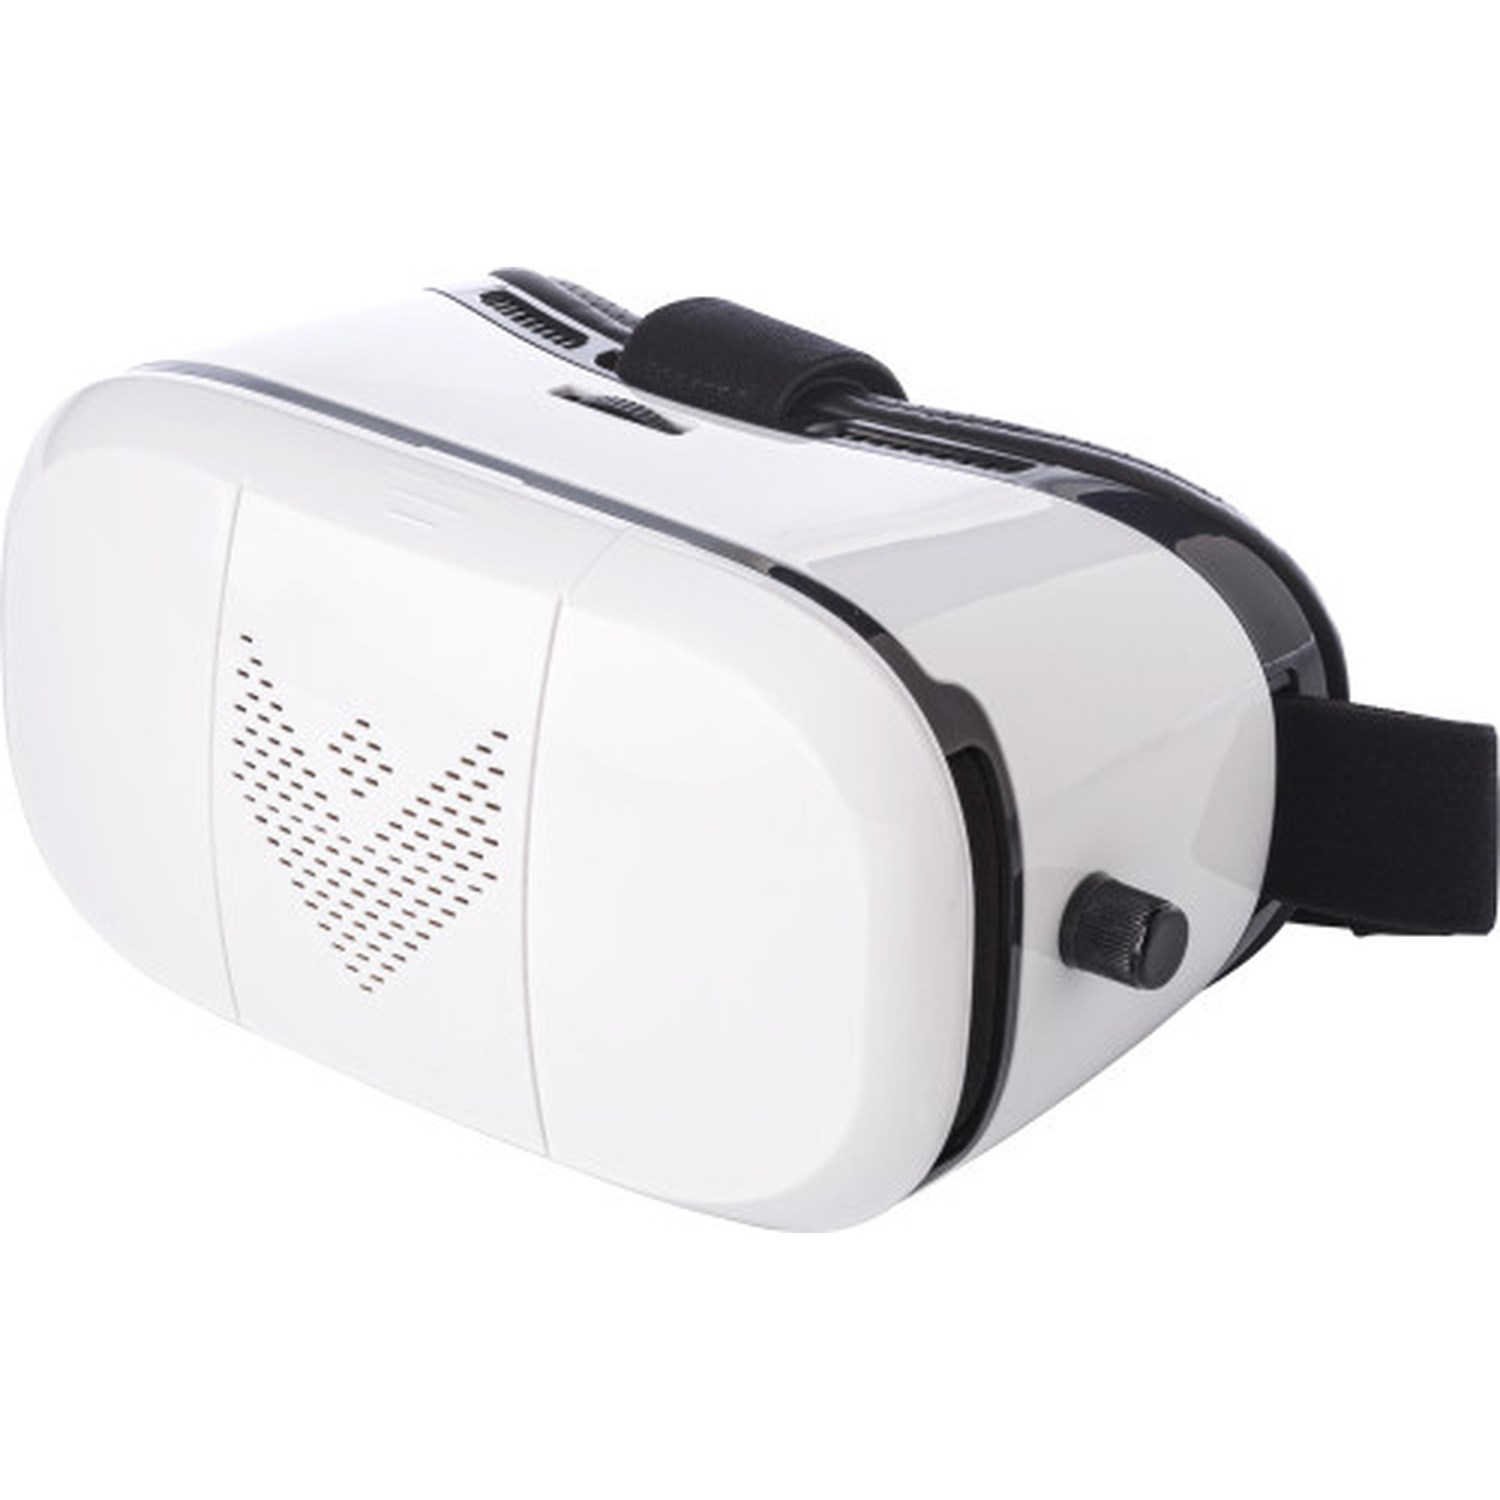 VR headset in white